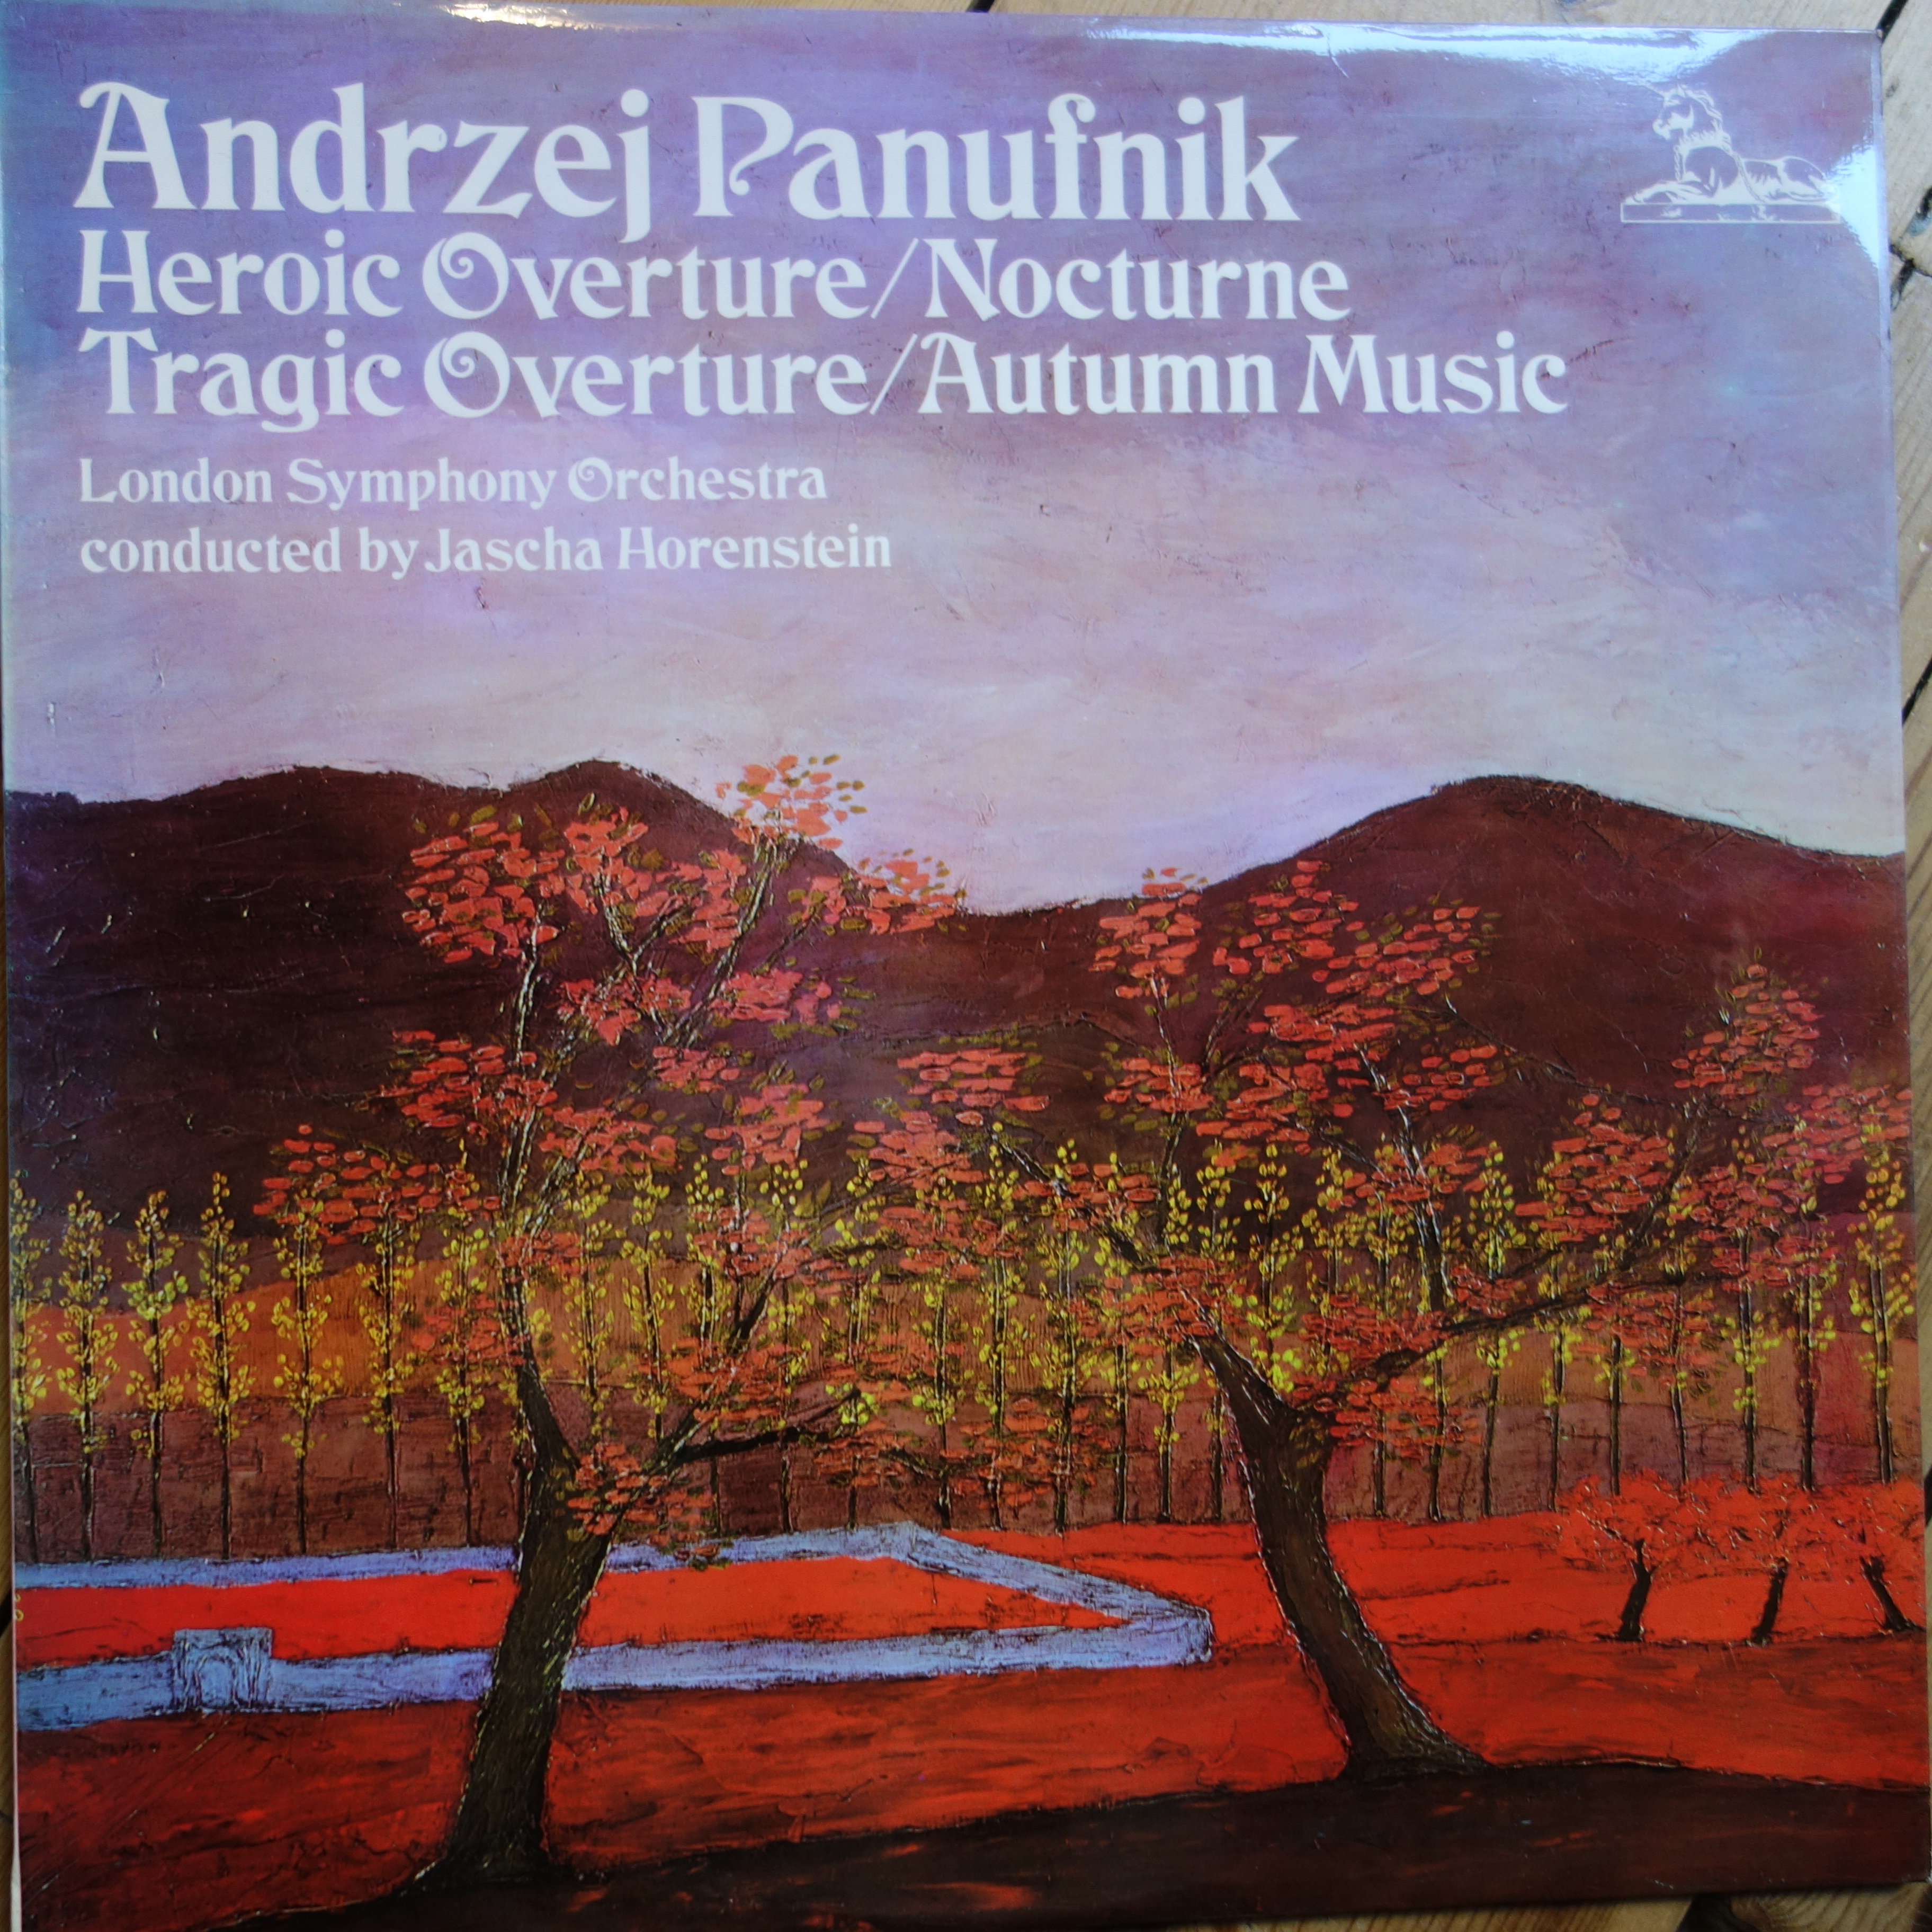 RHS 306 Panufnik Heroic Overture, Nocturne